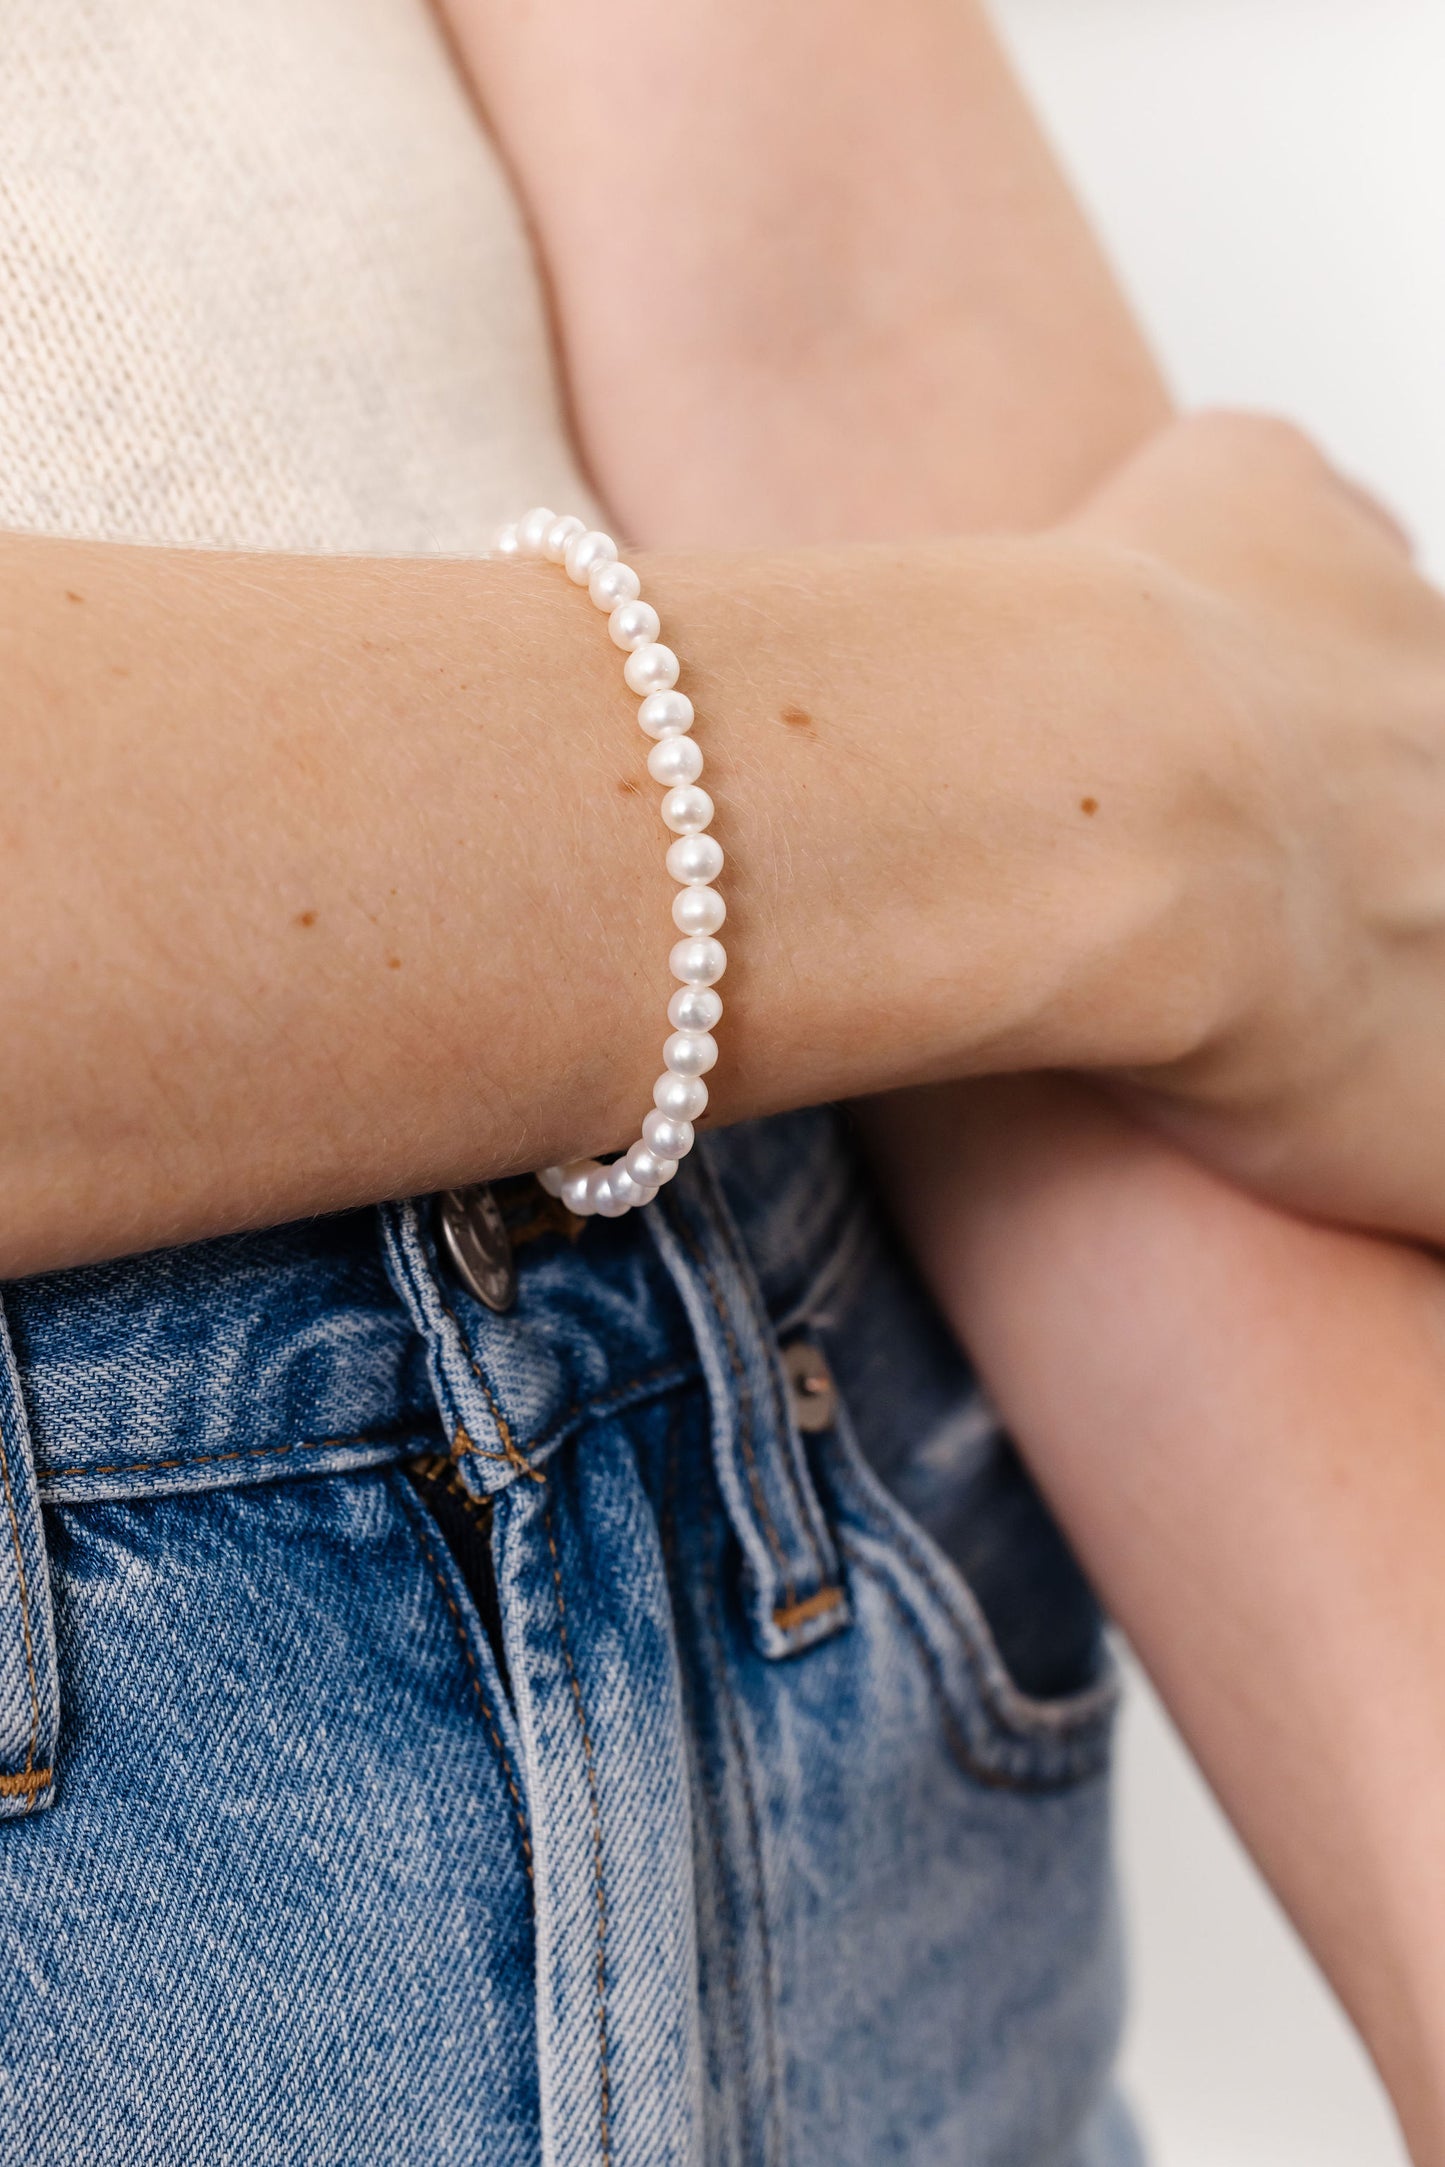 Freshwater Pearl Necklace + Adult Bracelet Set (6MM Beads)